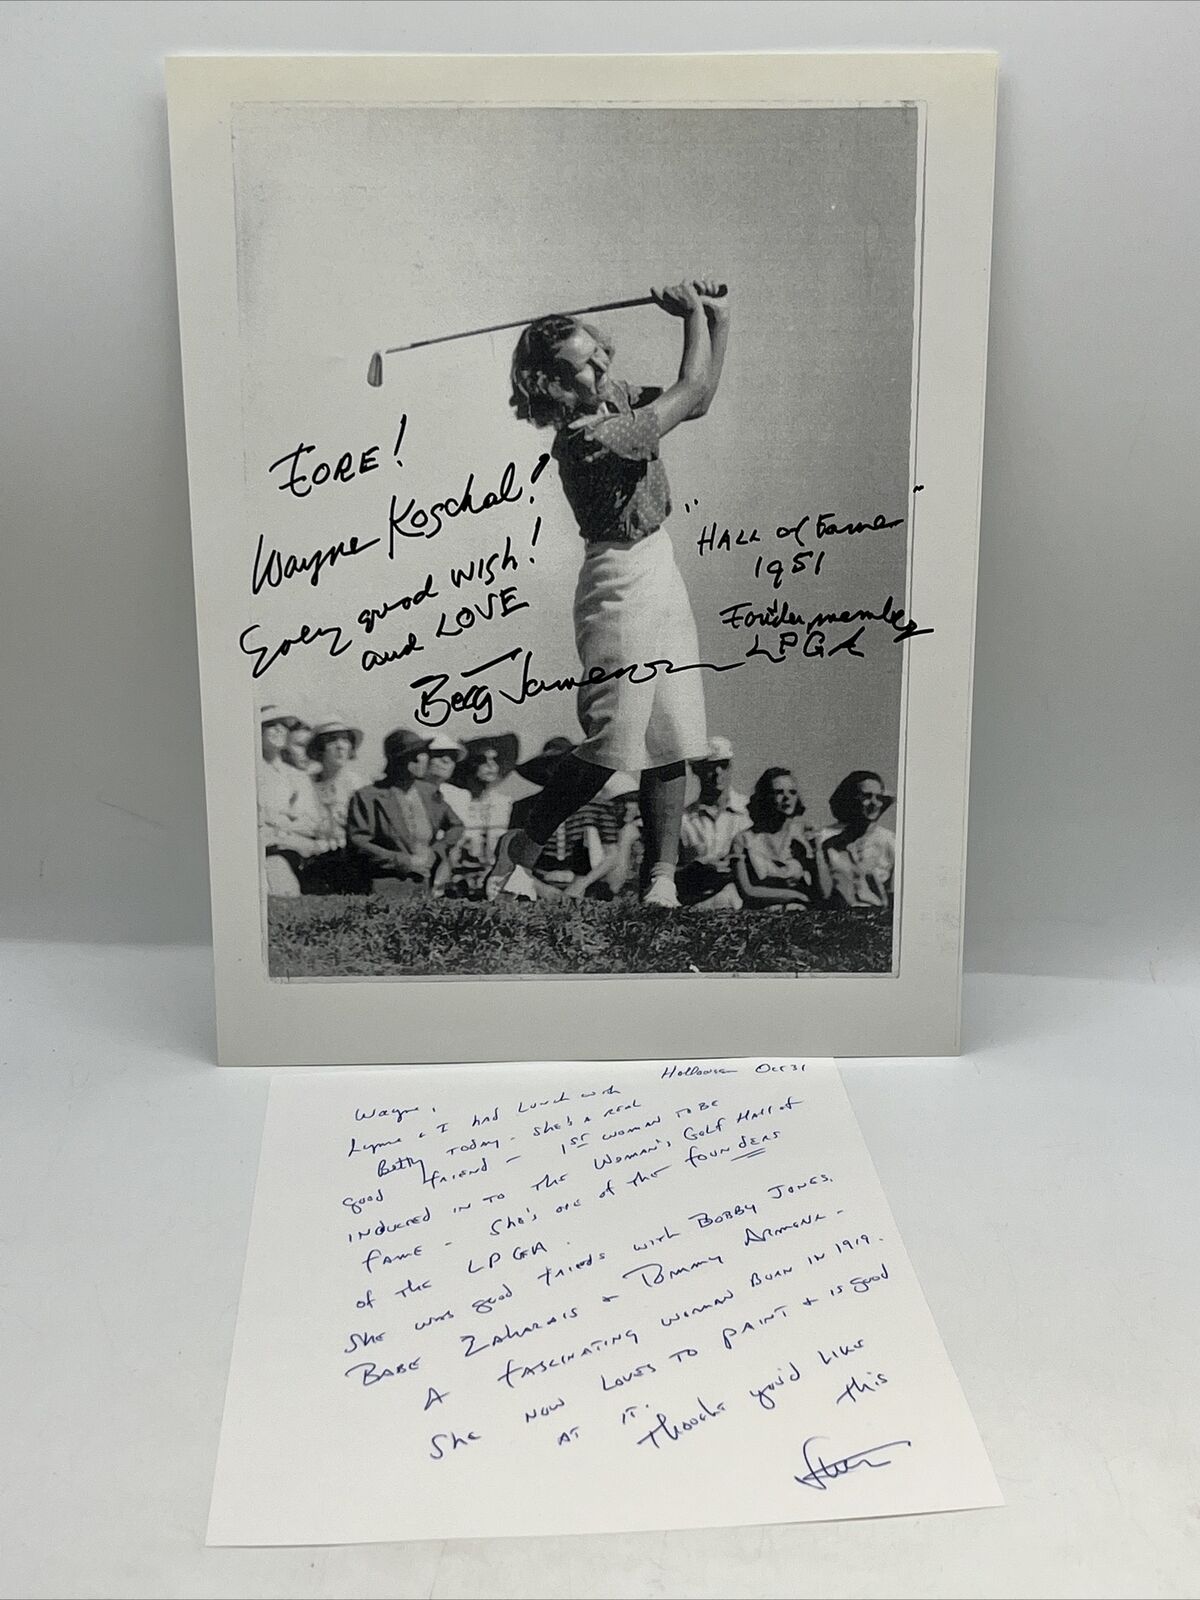 1951 Press Photo Betty Jameson Golfer Hall A Fame Autographed W Handwritten Note